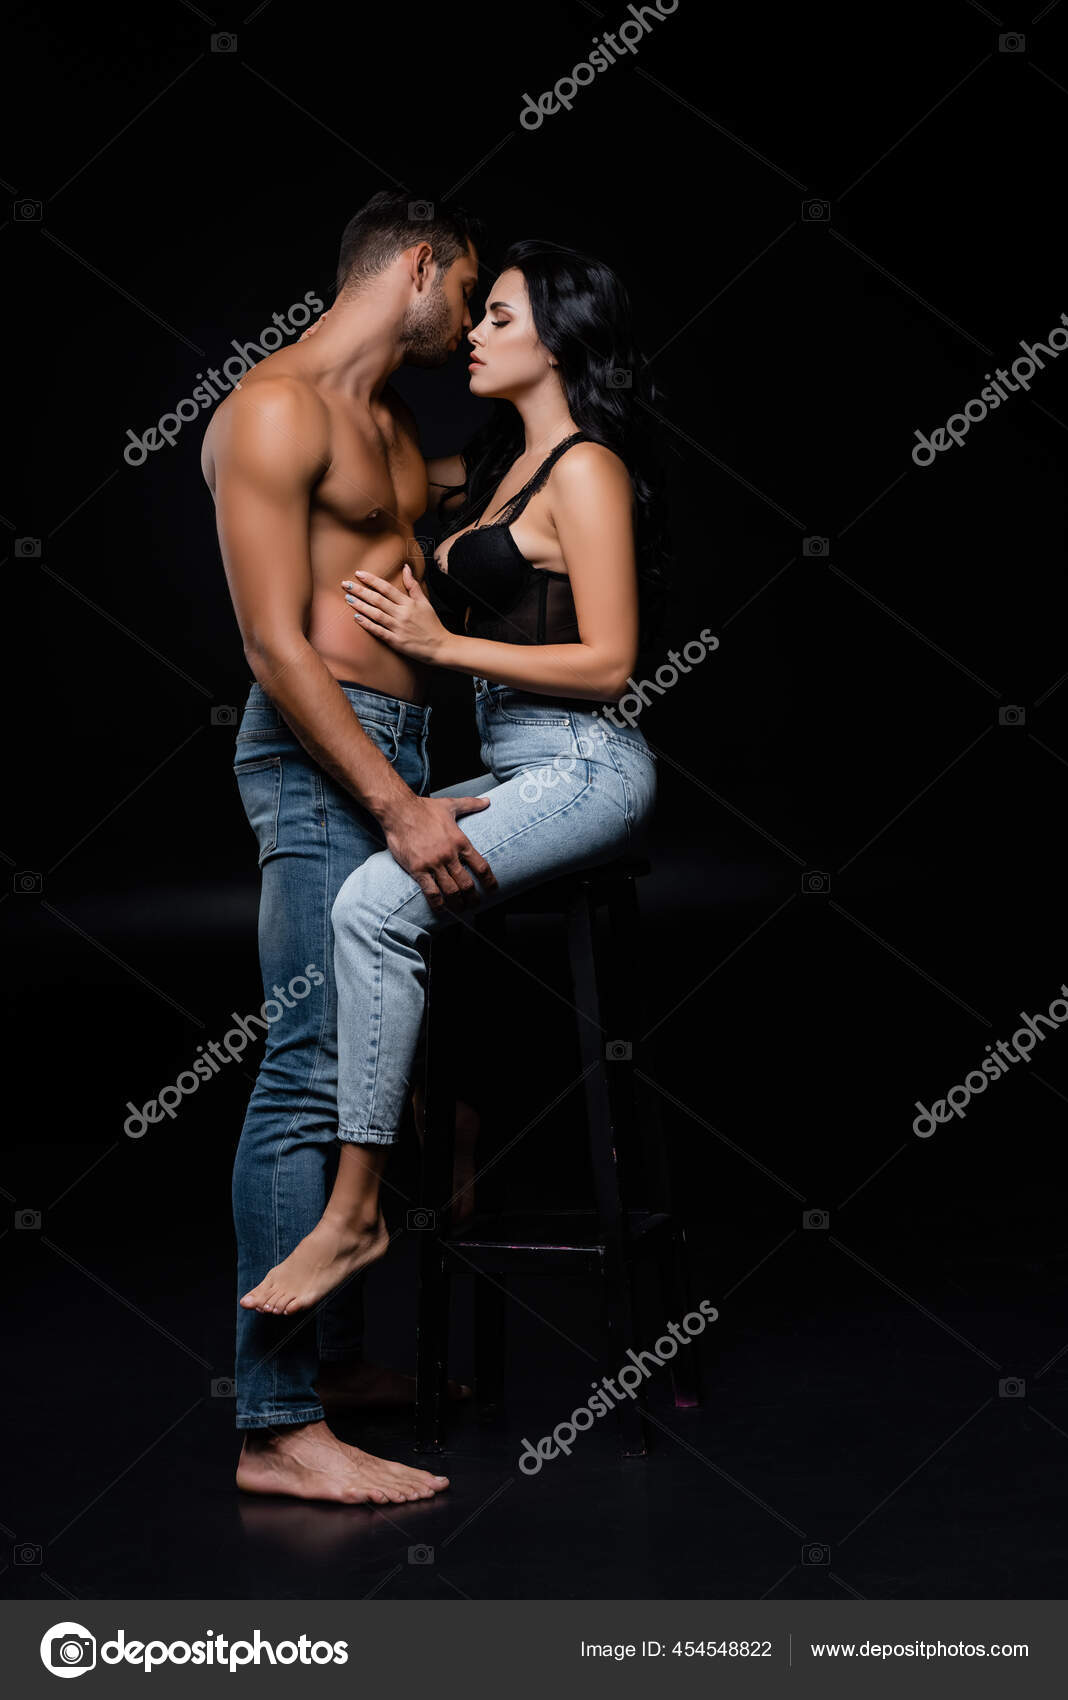 wife sitting in chair kissing black Porn Photos Hd